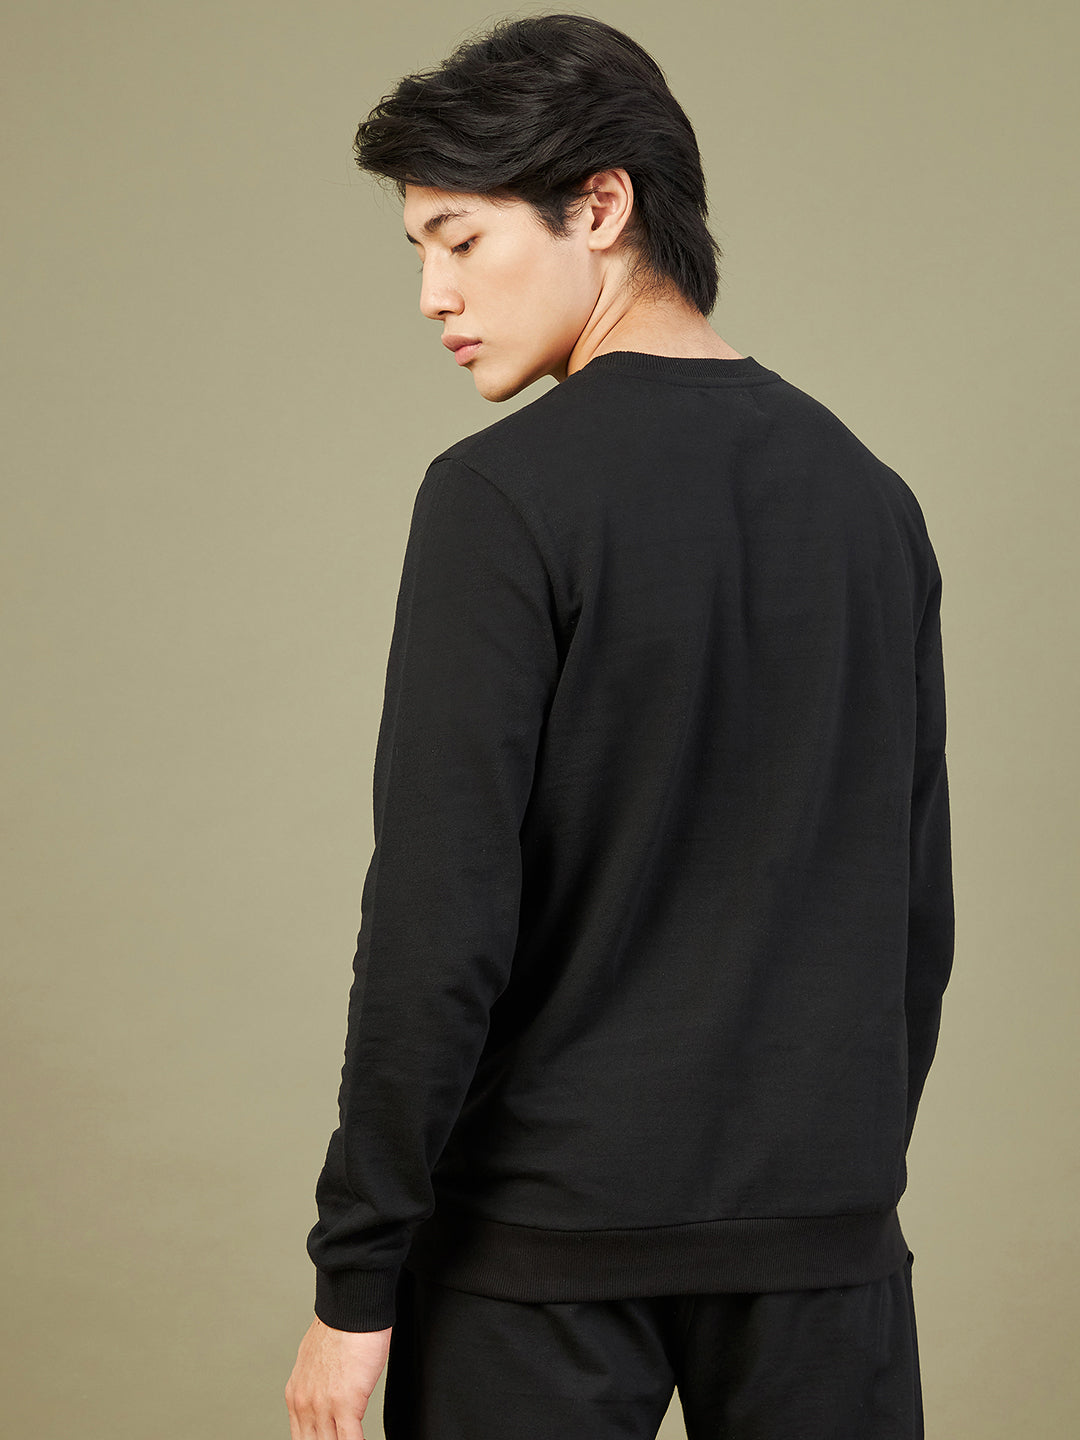 Men's Black Cactus Embroidery Sweatshirt - LYUSH-MASCLN